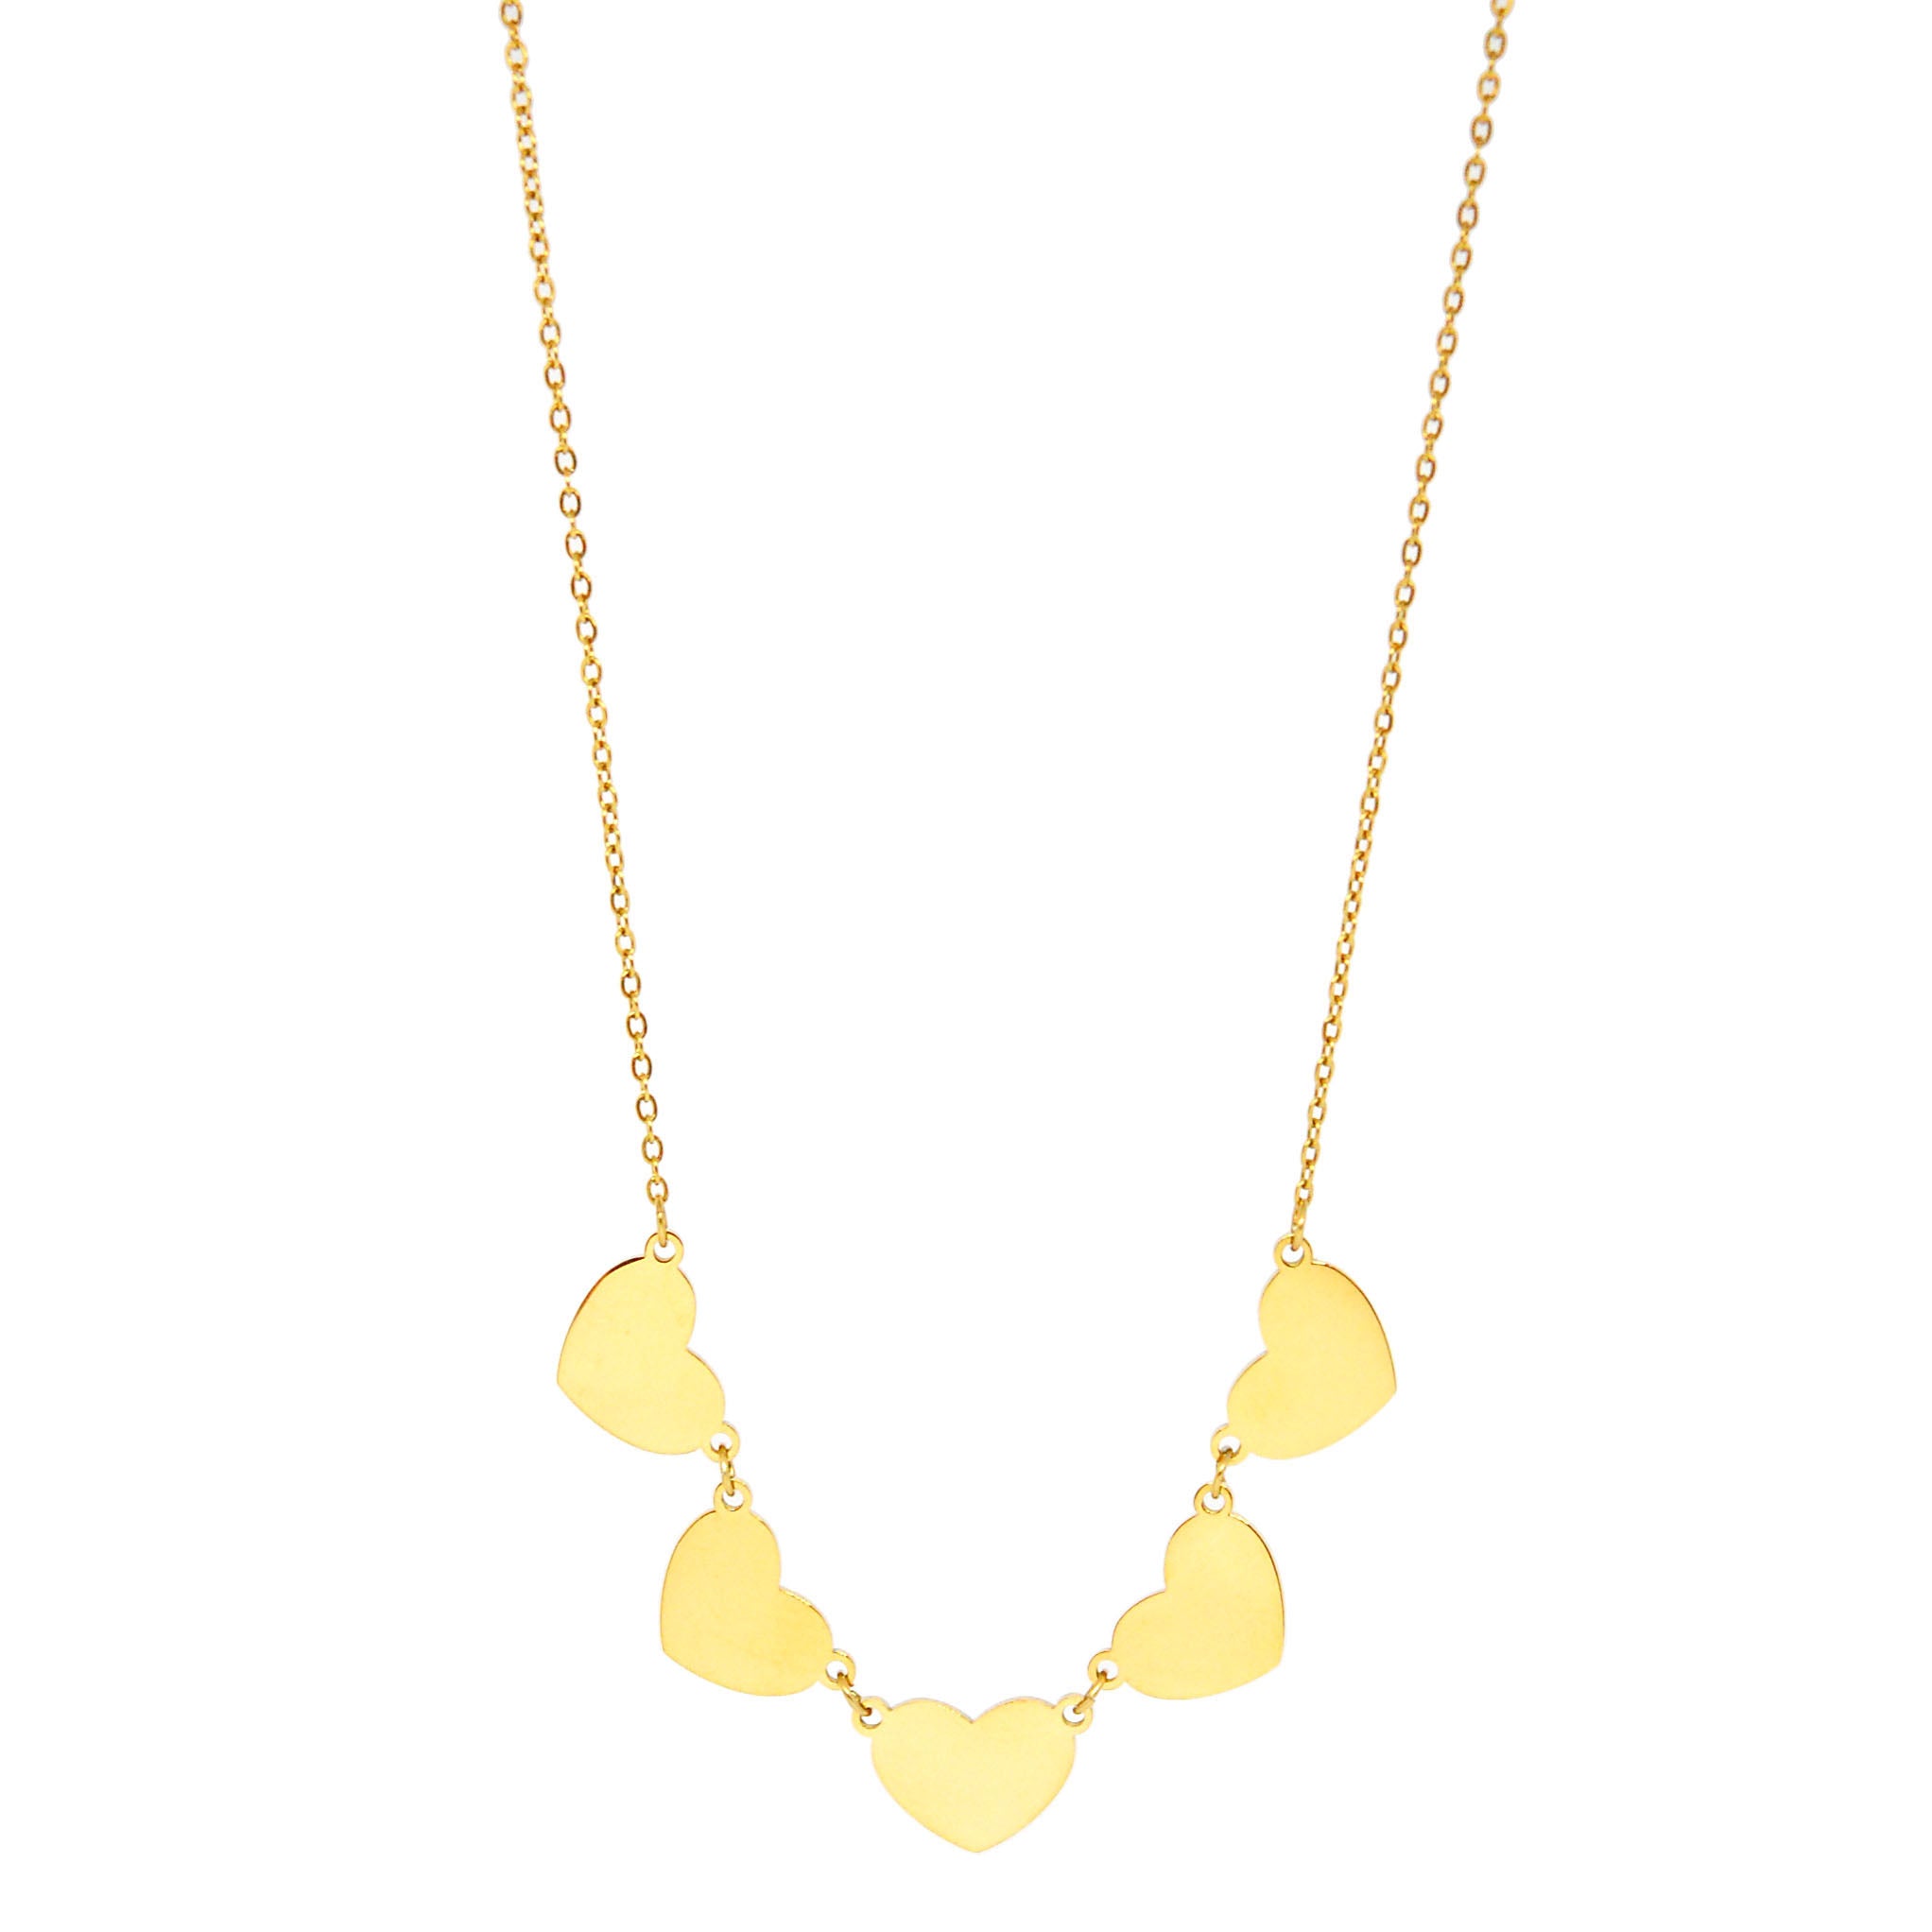 SET 7624: Gold-Plated 4-Flat Heart Necklace & IPG Flat Heart Earrings Set